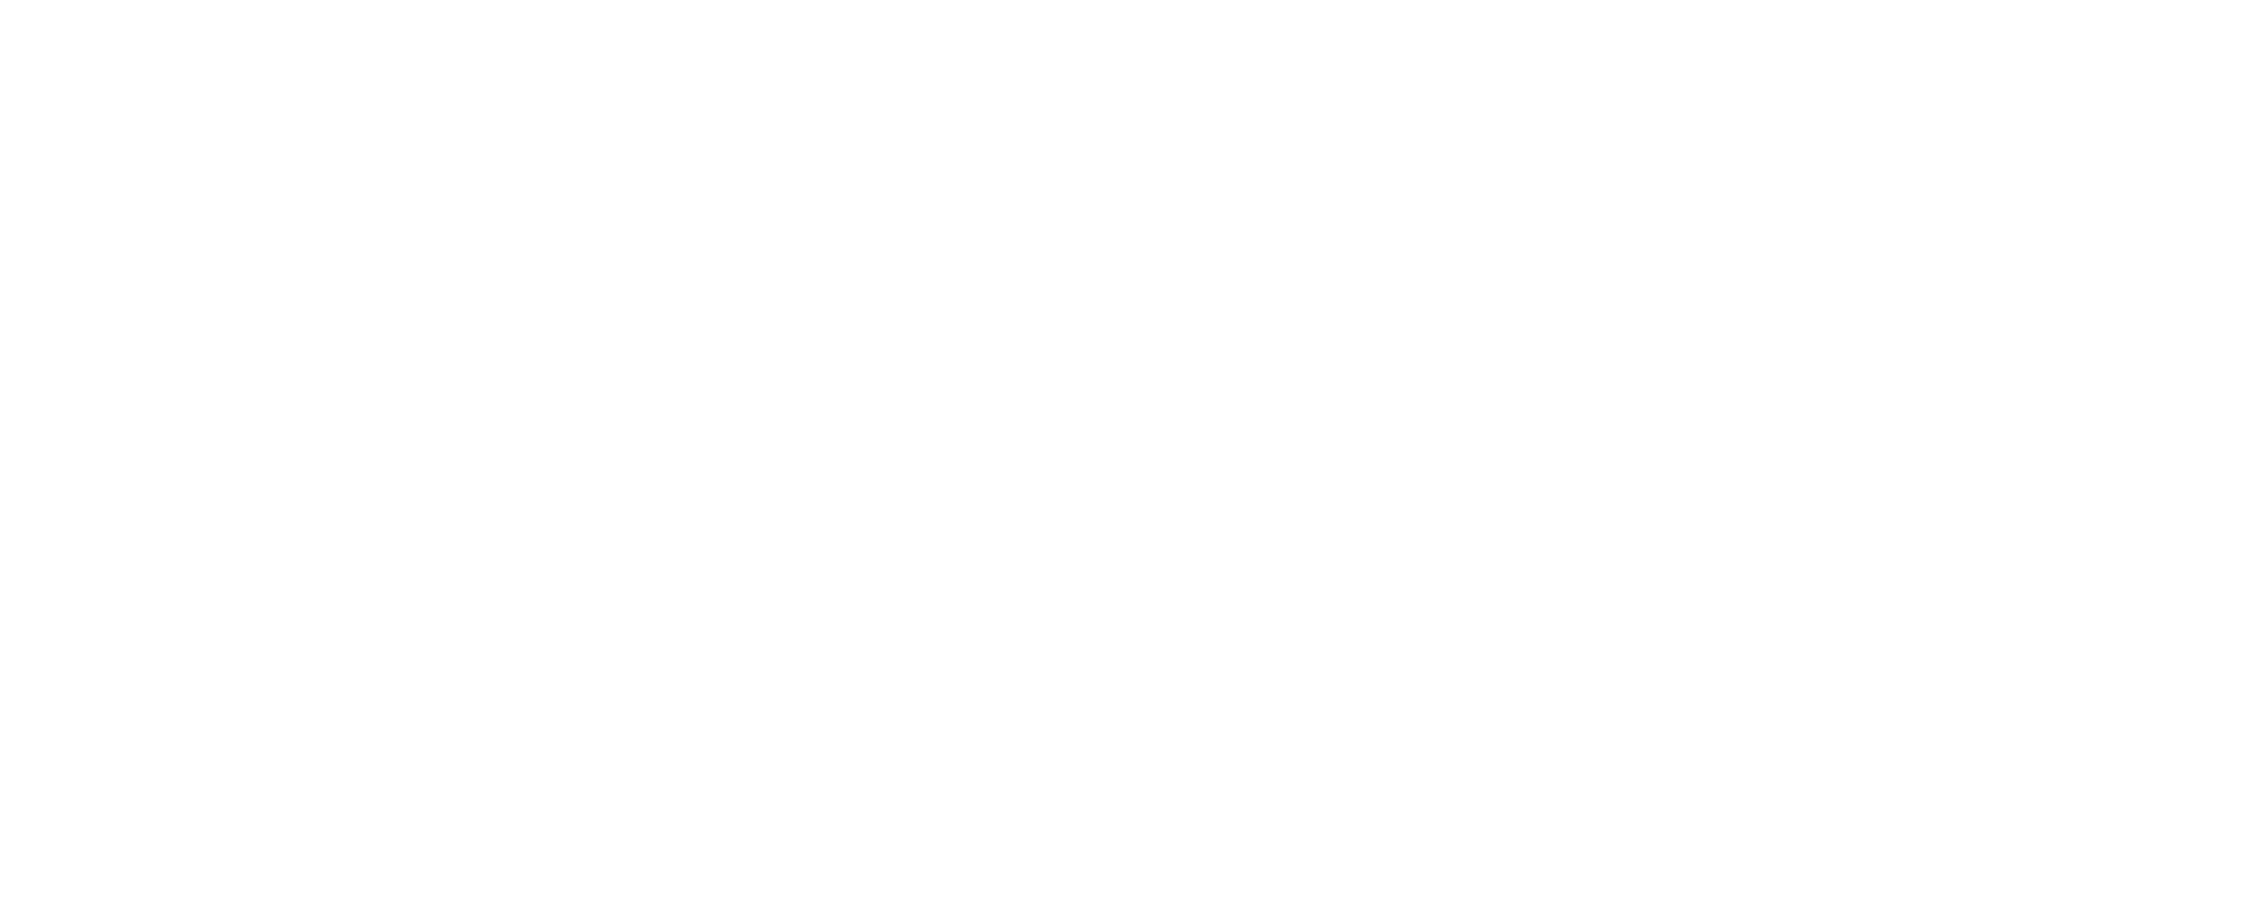 K LaMay's Steamed Cheeseburgers